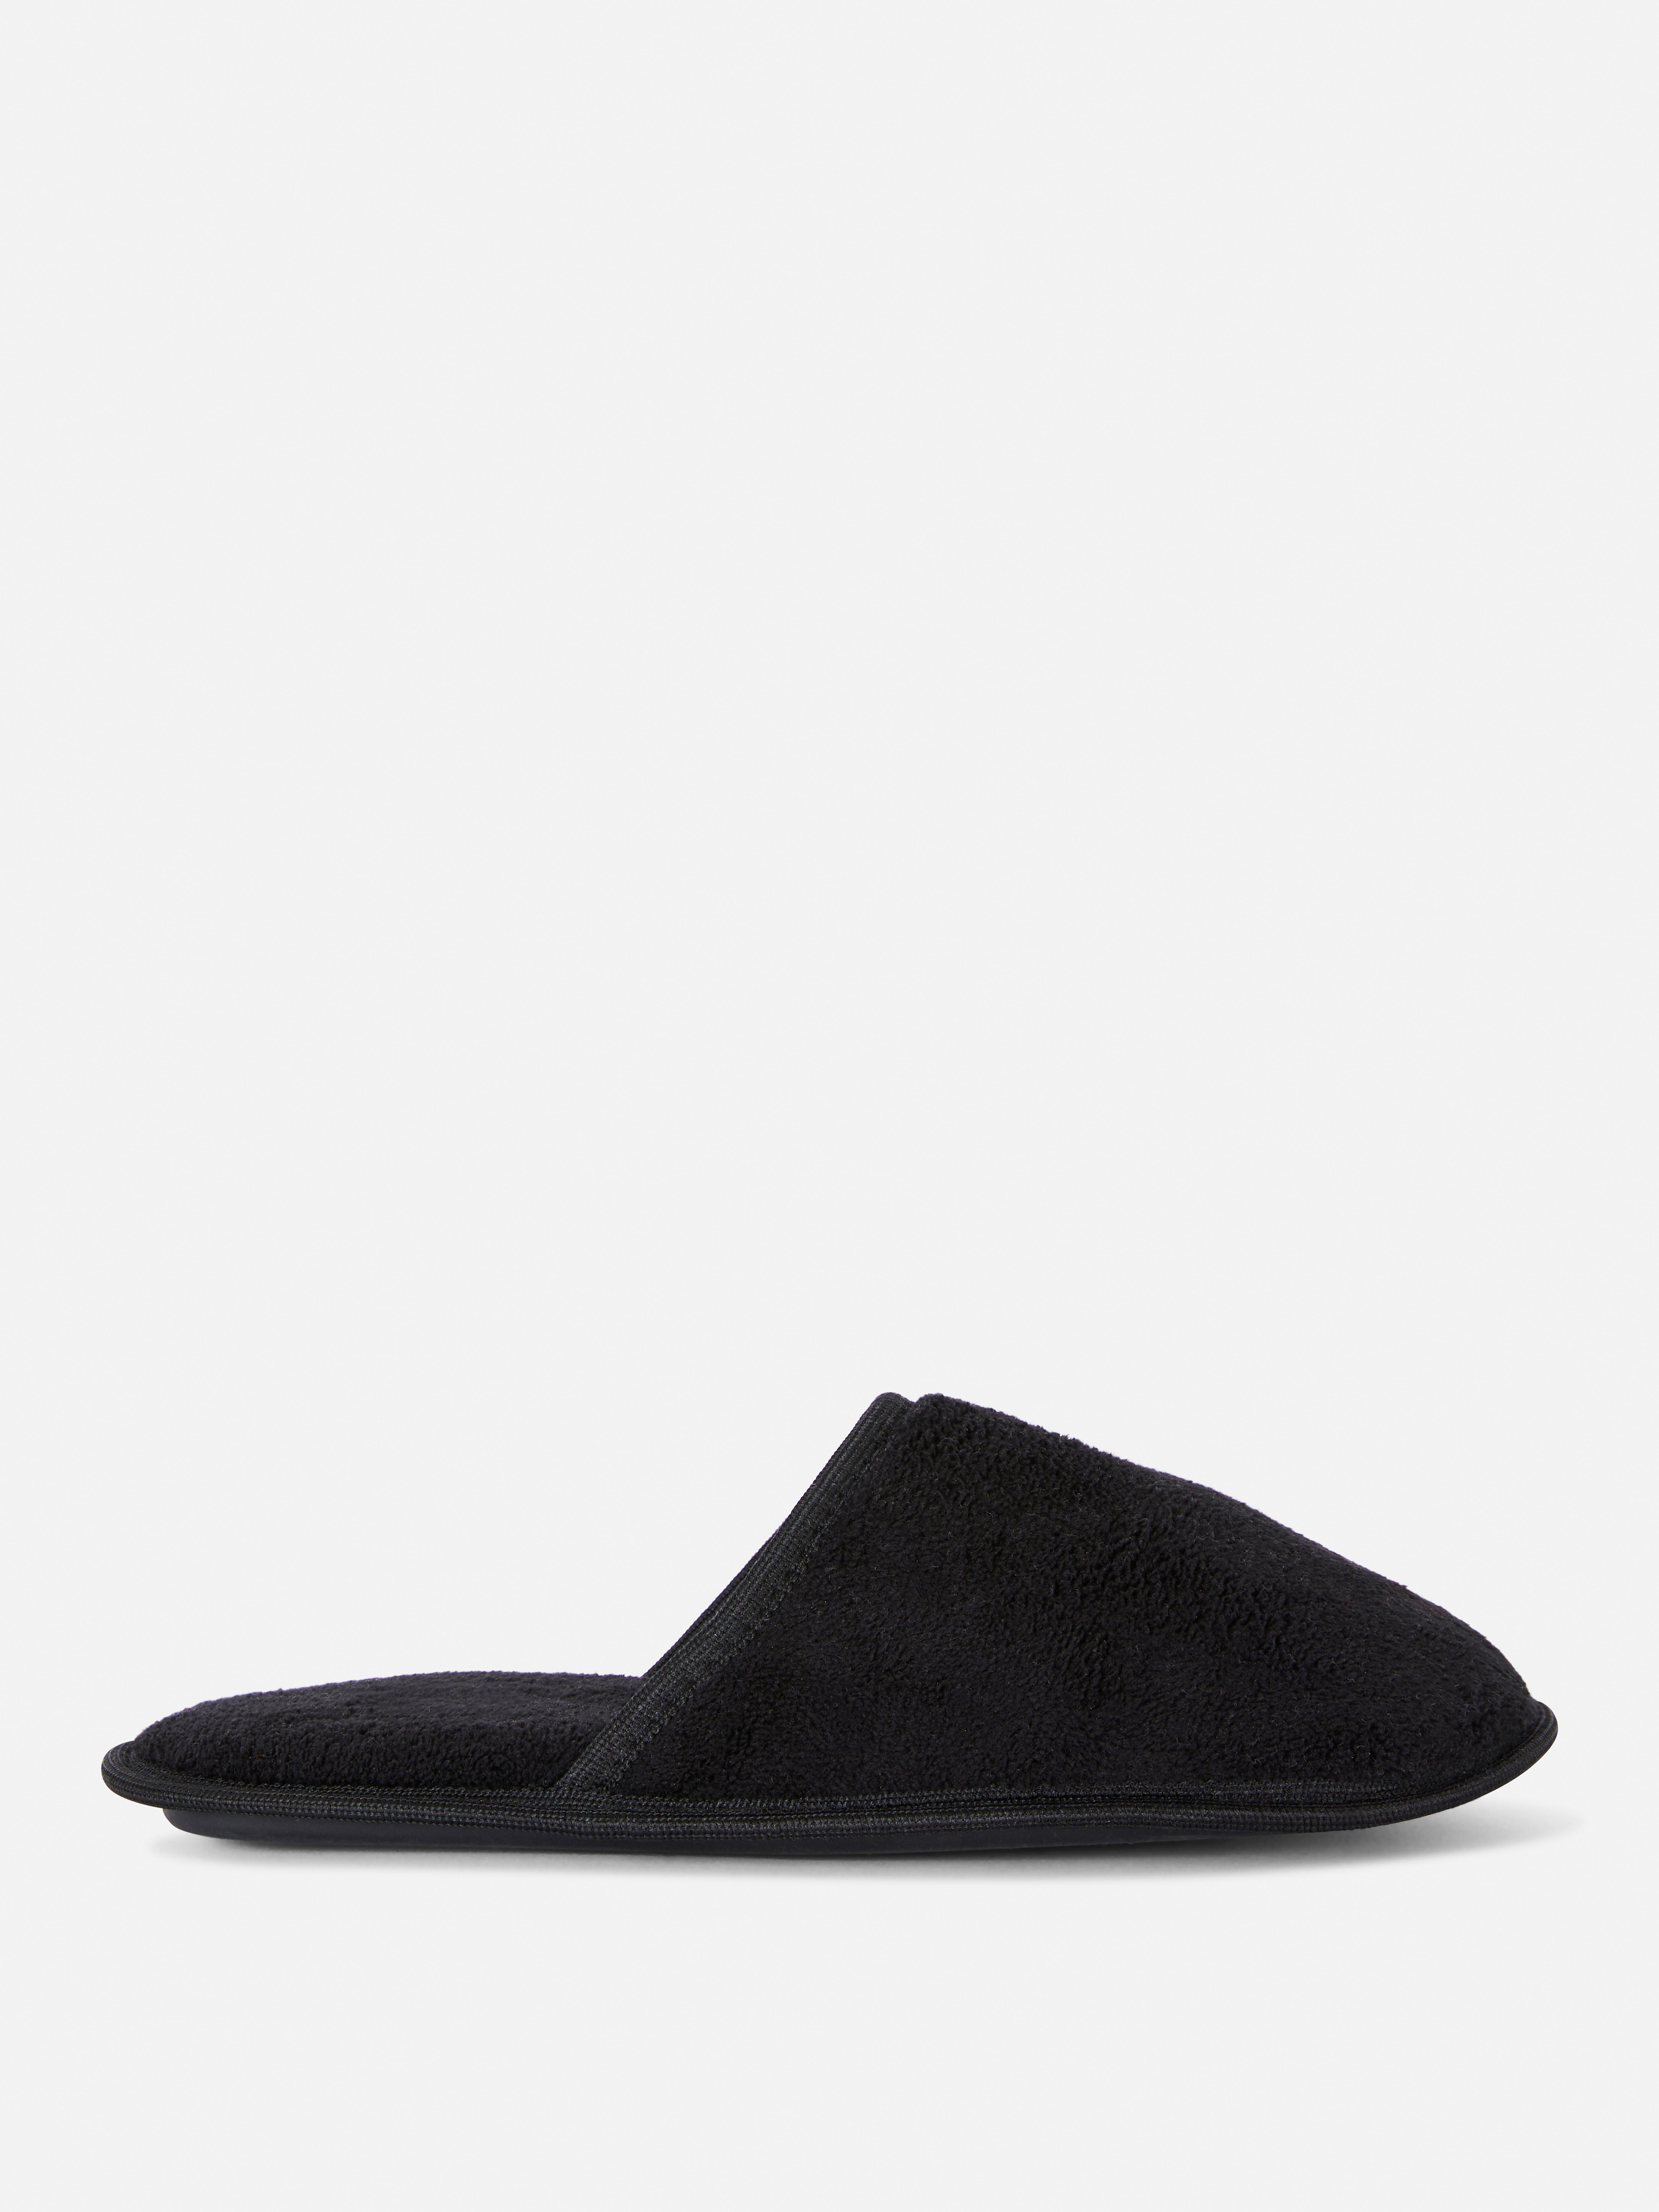 Black fleece slippers